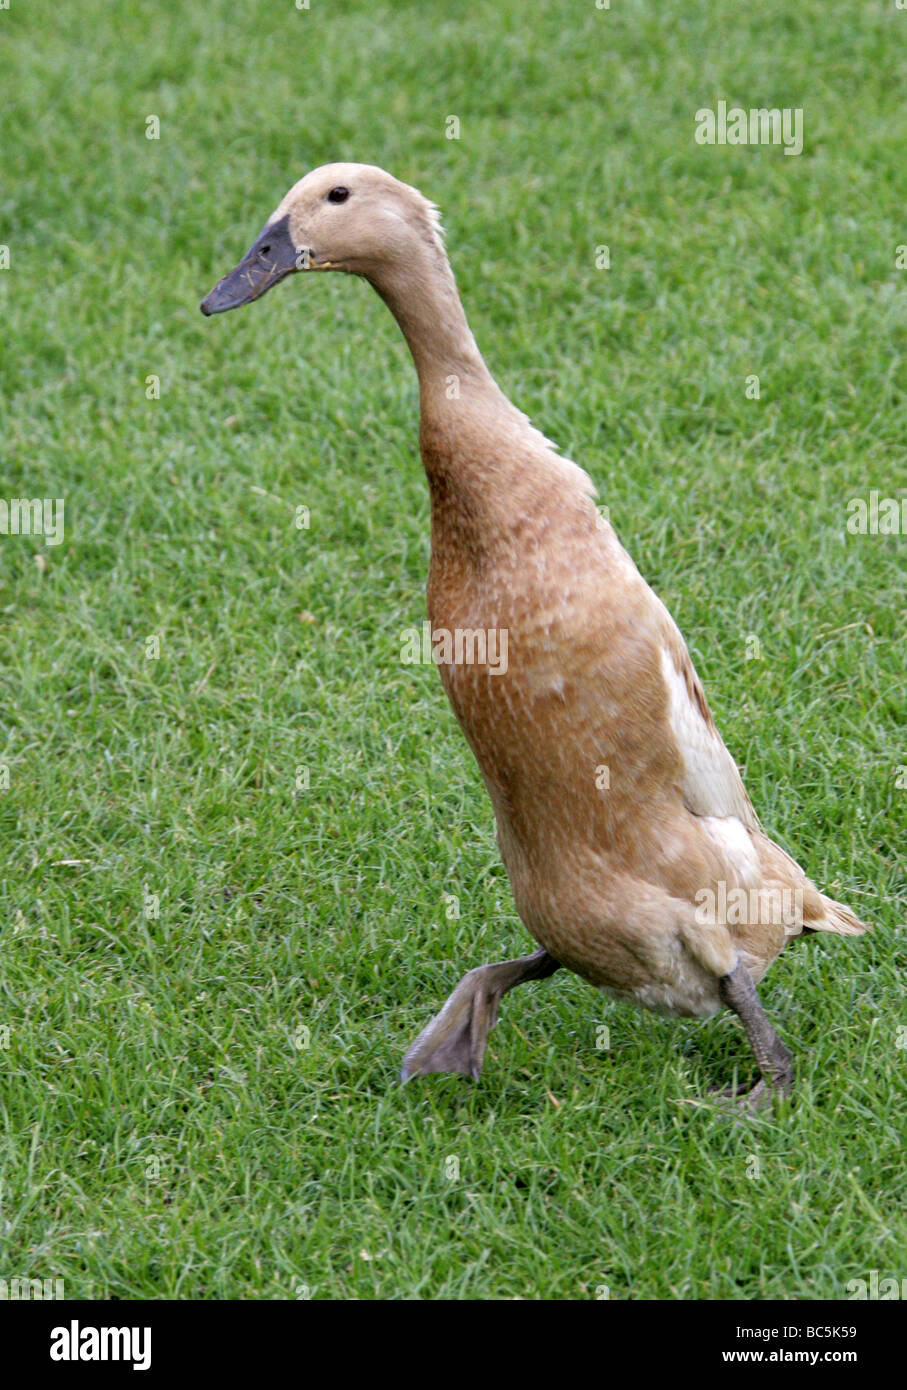 Buff Indian Runner Duck, Anatidae, Anseriformes Stock Photo